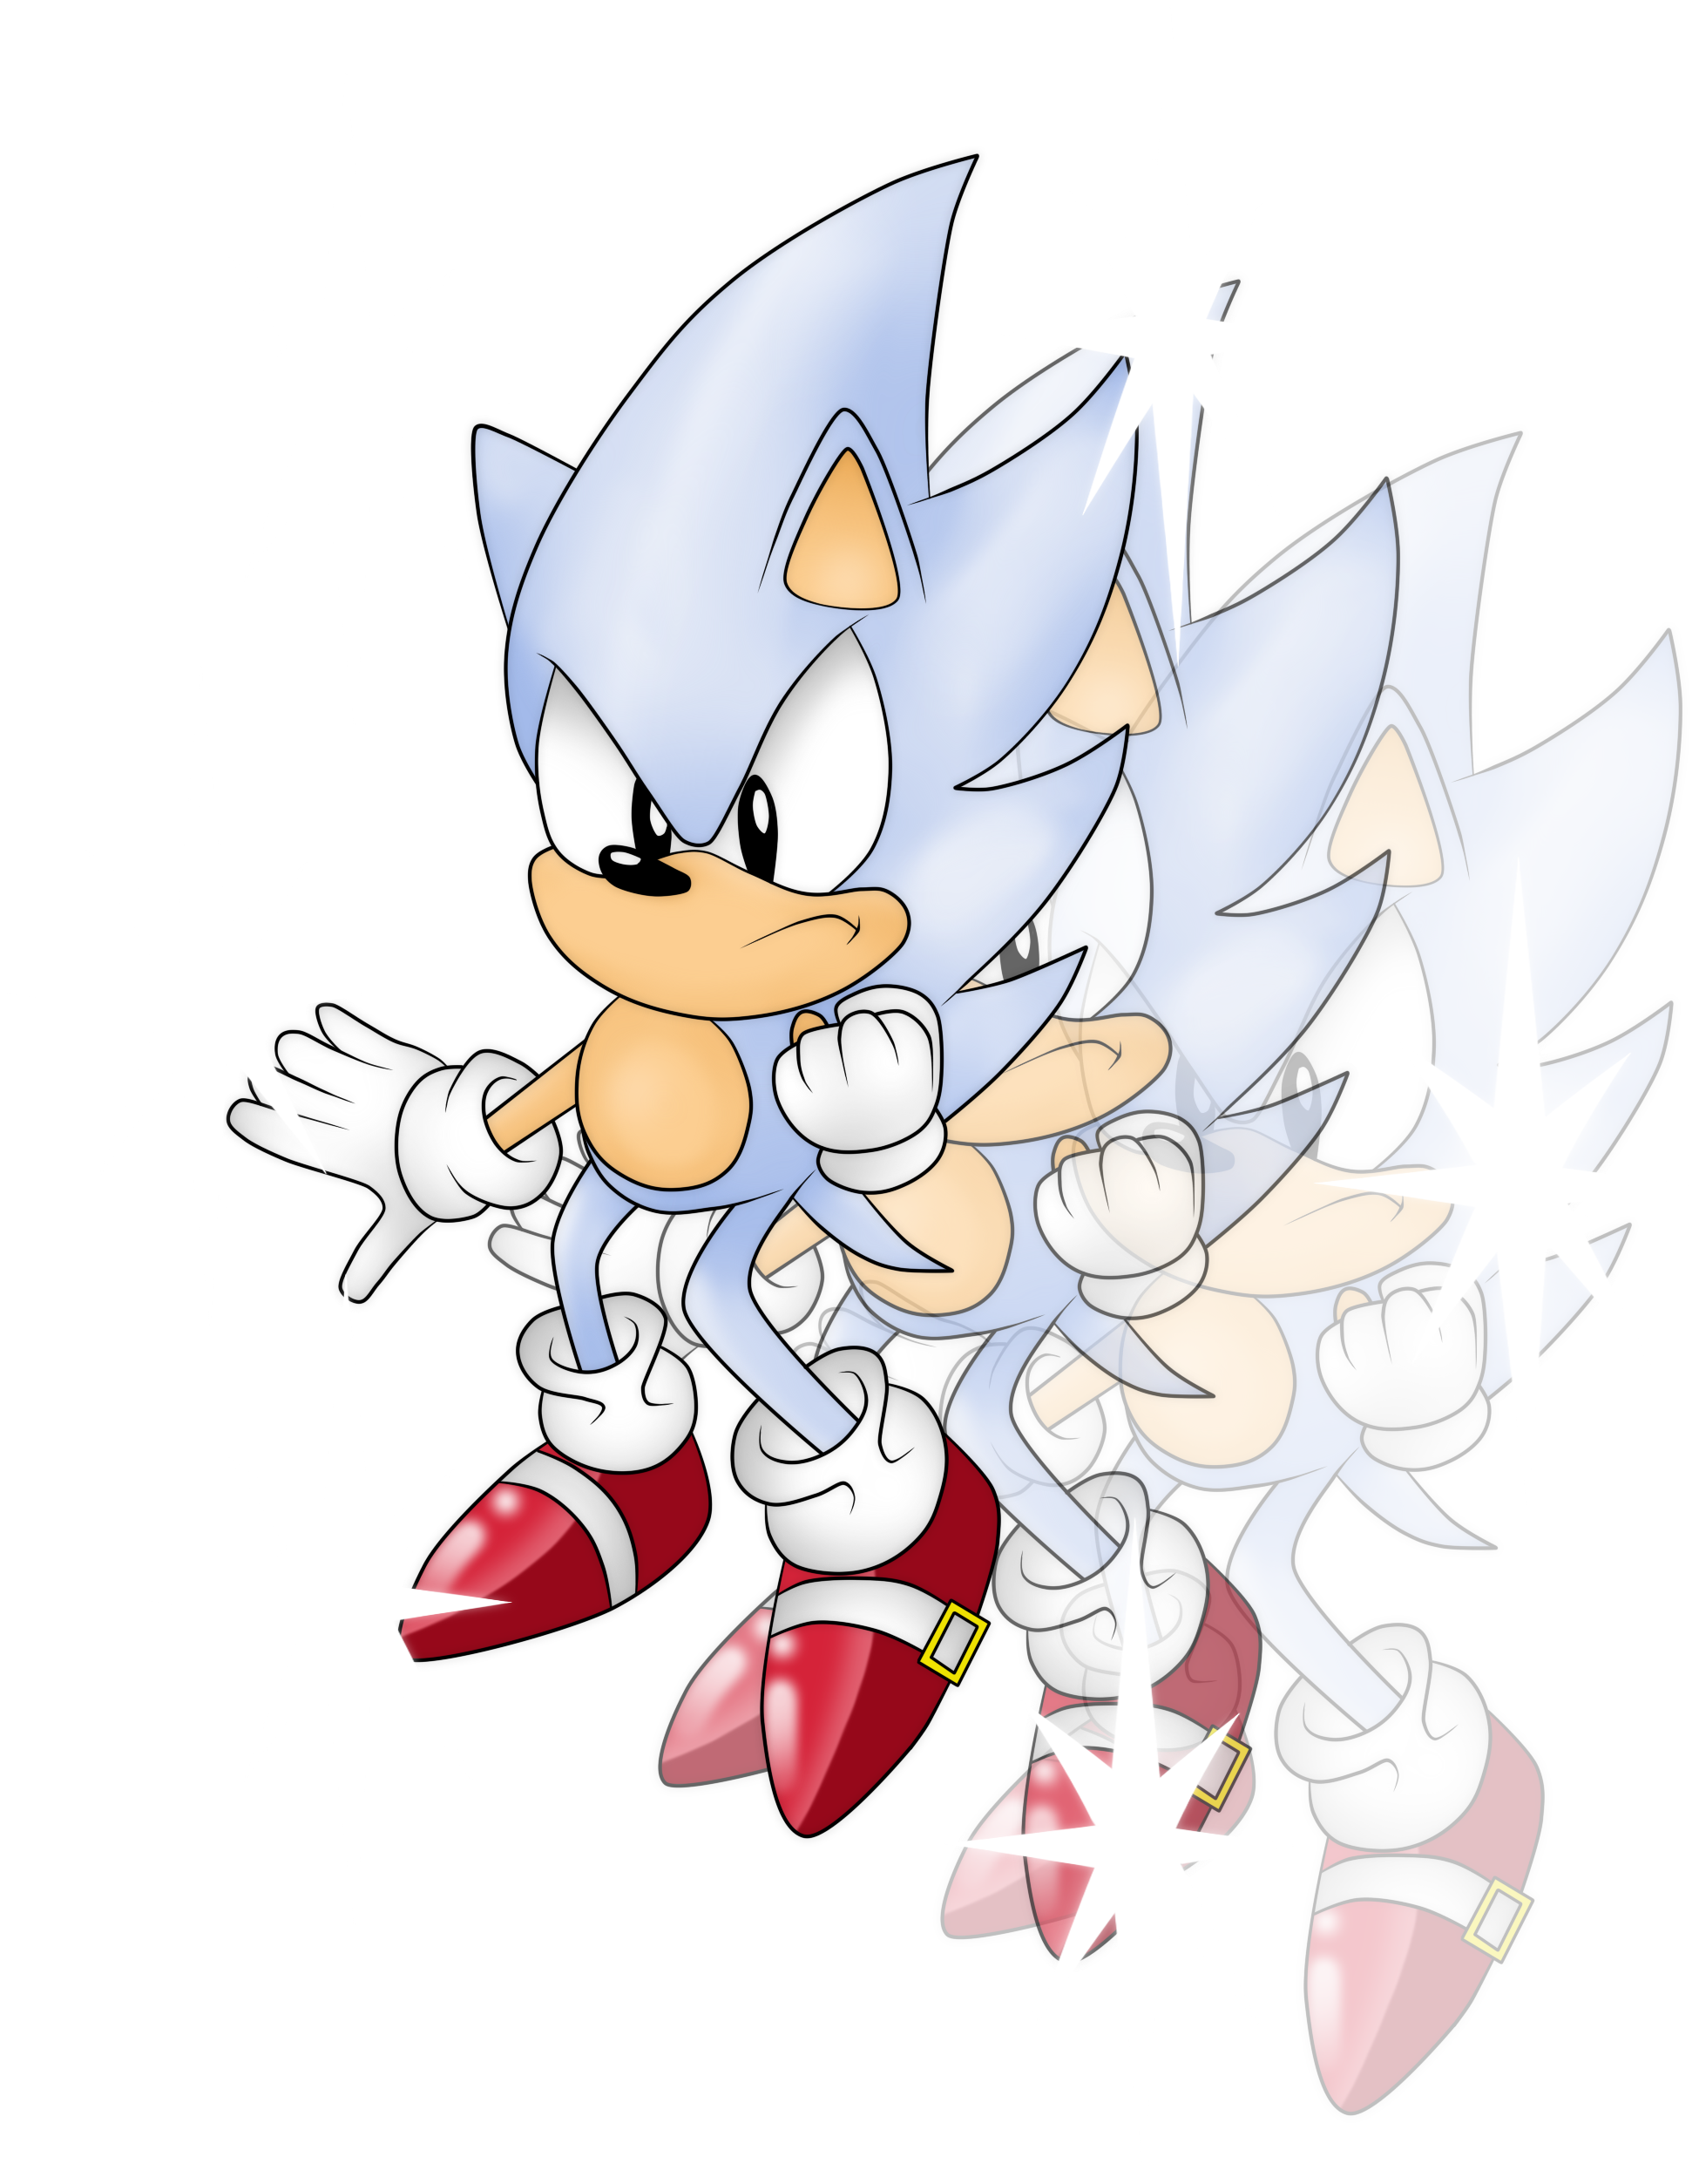 Classic Sonic Multiple Poses